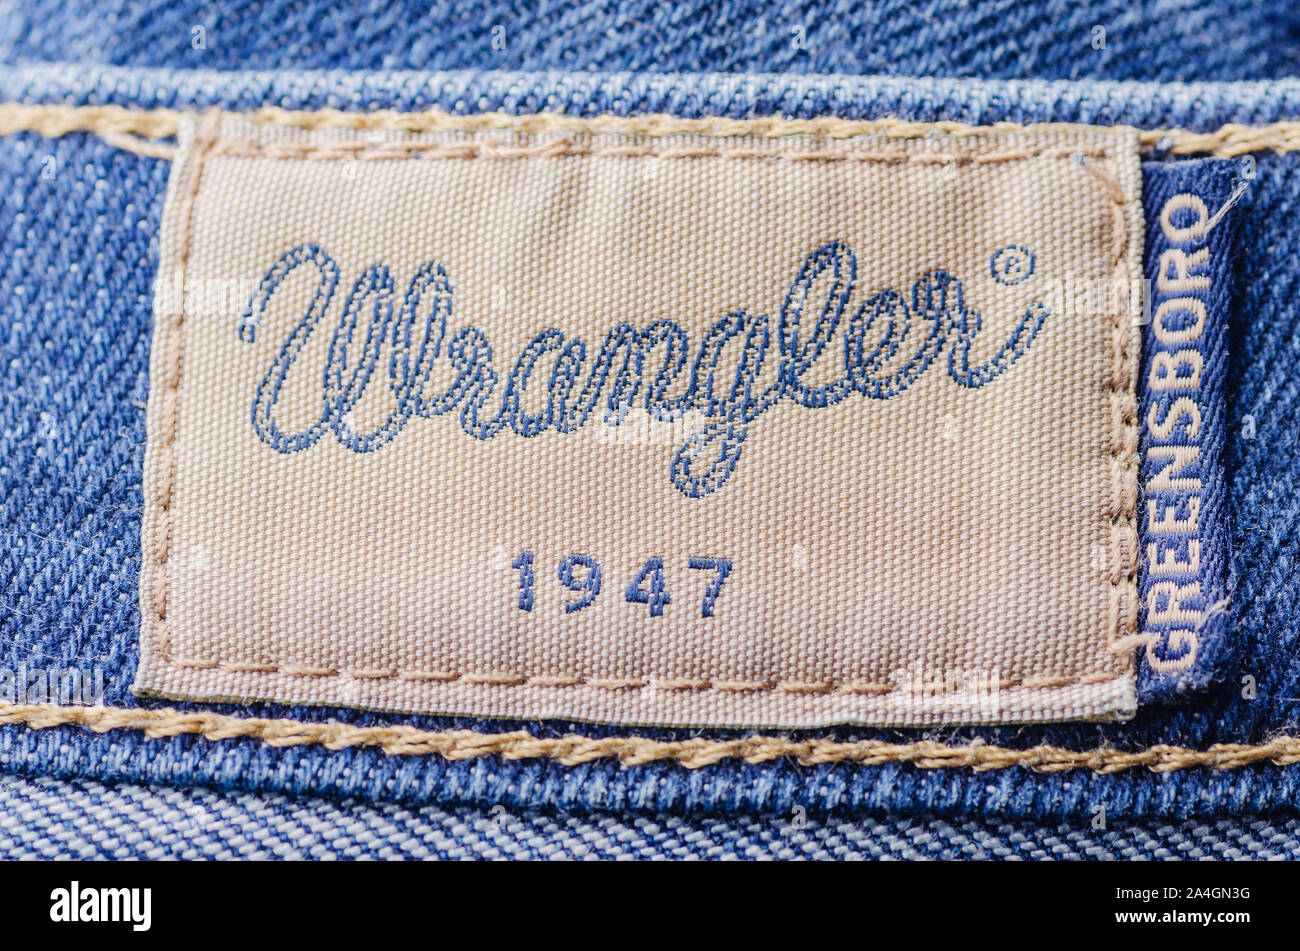 Closeup of Wrangler label on blue jeans Stock Photo - Alamy